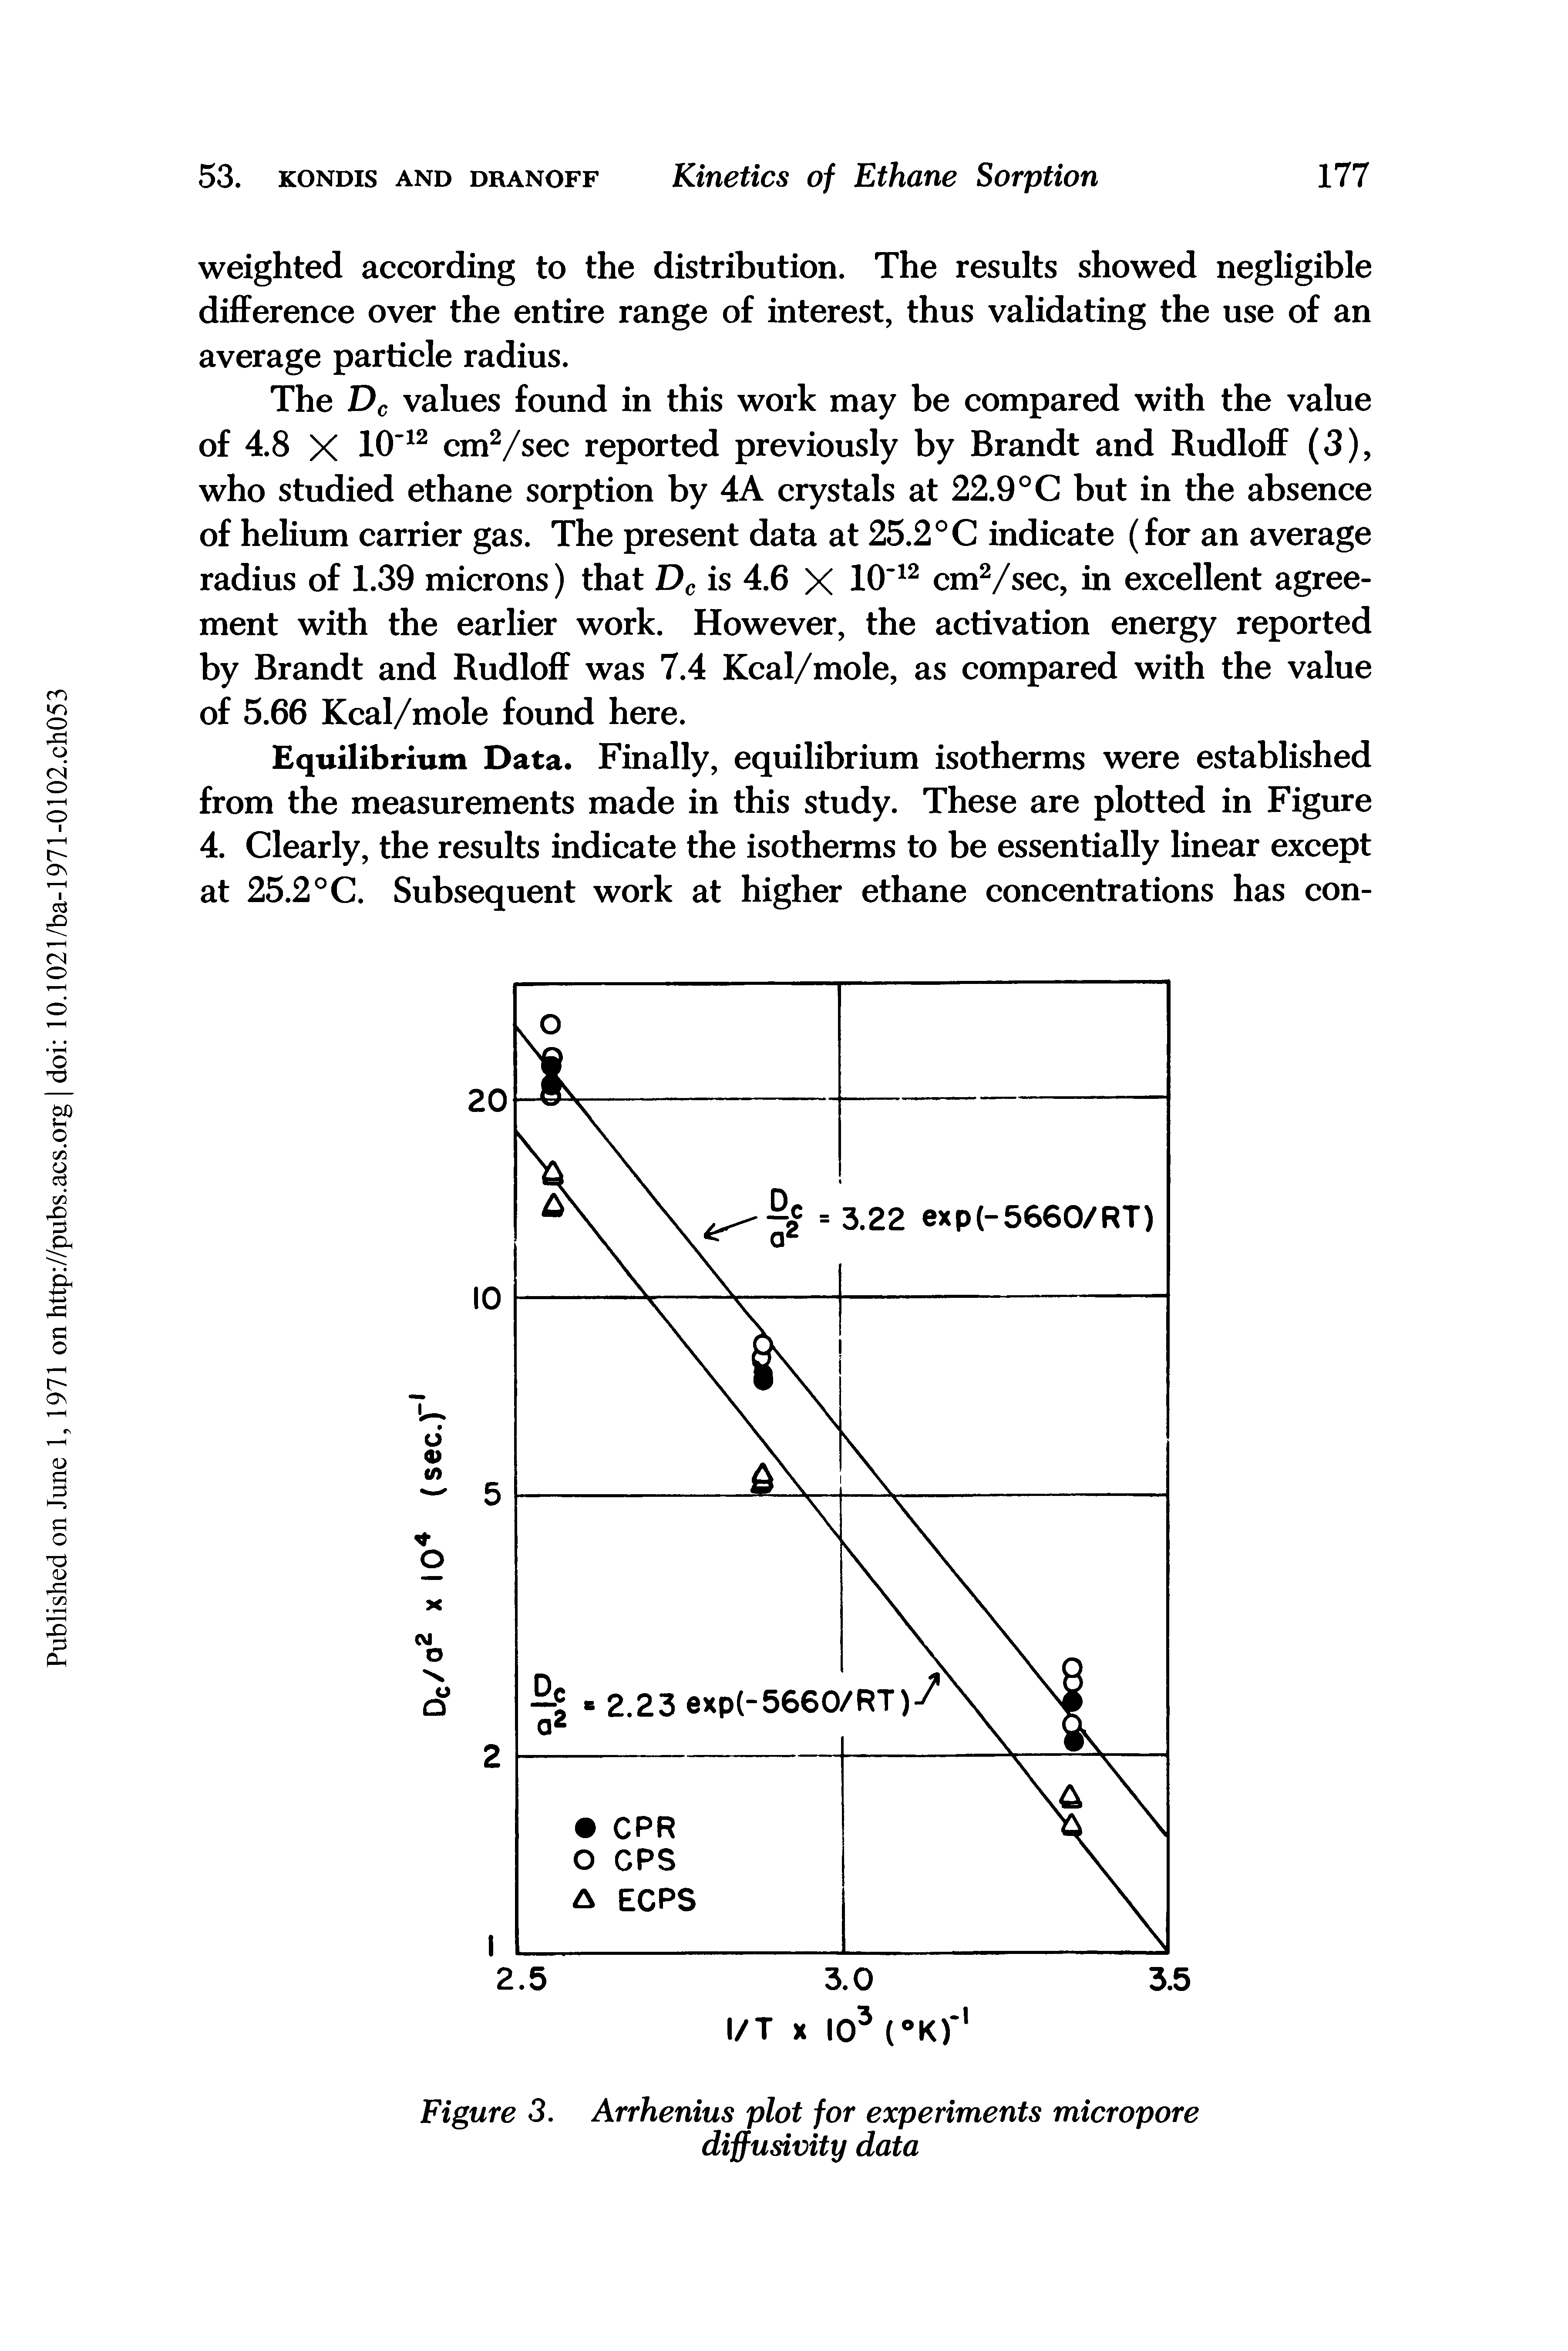 Figure 3. Arrhenius plot for experiments micropore diffusivity data...